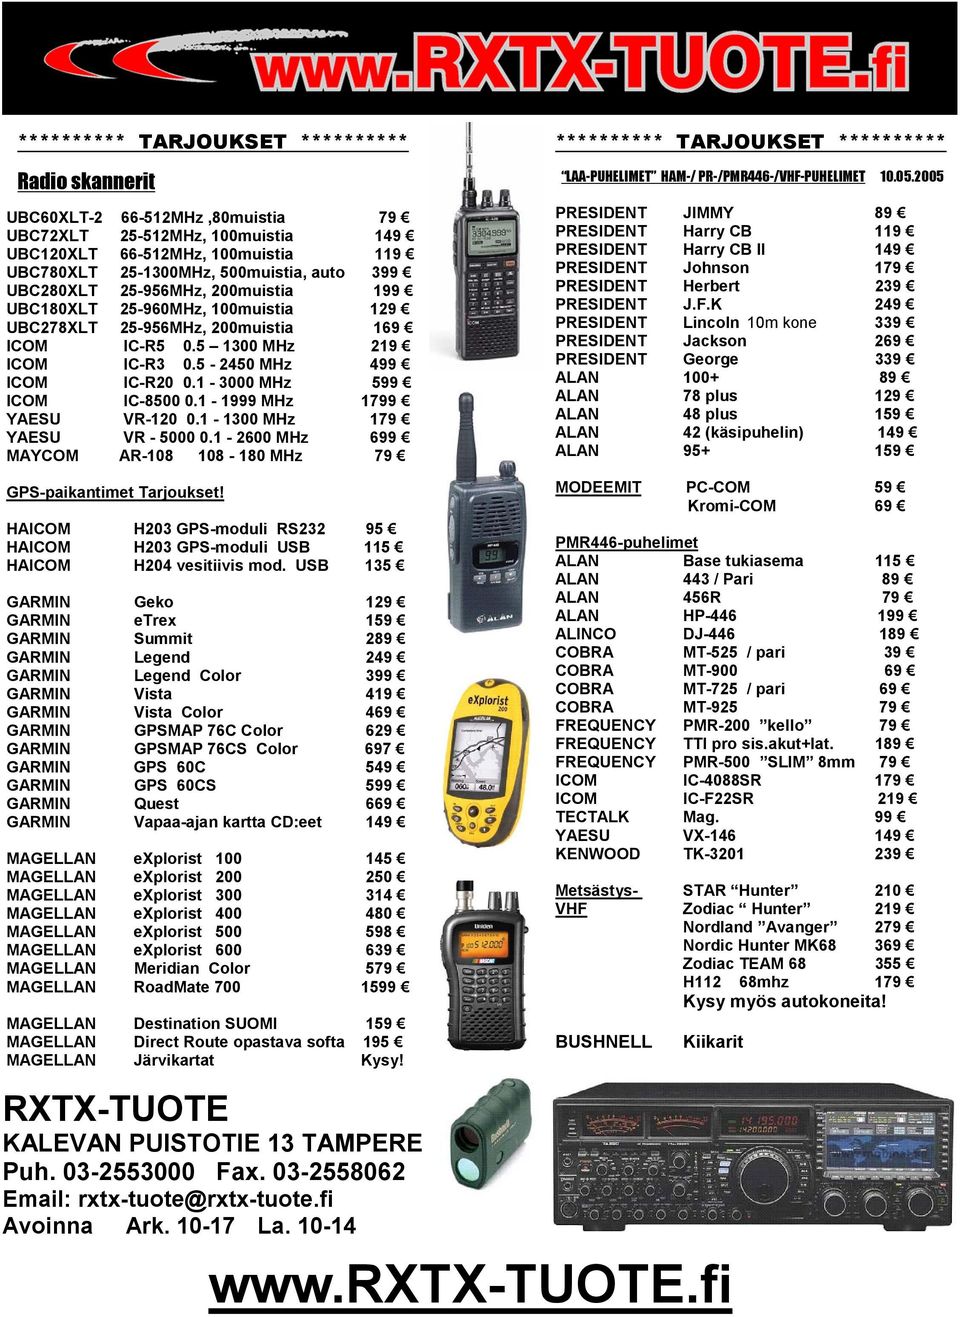 1-1999 MHz 1799 YAESU VR-120 0.1-1300 MHz 179 YAESU VR - 5000 0.1-2600 MHz 699 MAYCOM AR-108 108-180 MHz 79 GPS-paikantimet Tarjoukset!